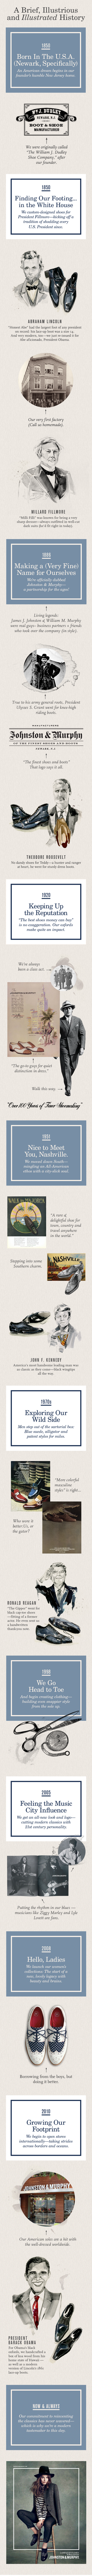 american shoe sites